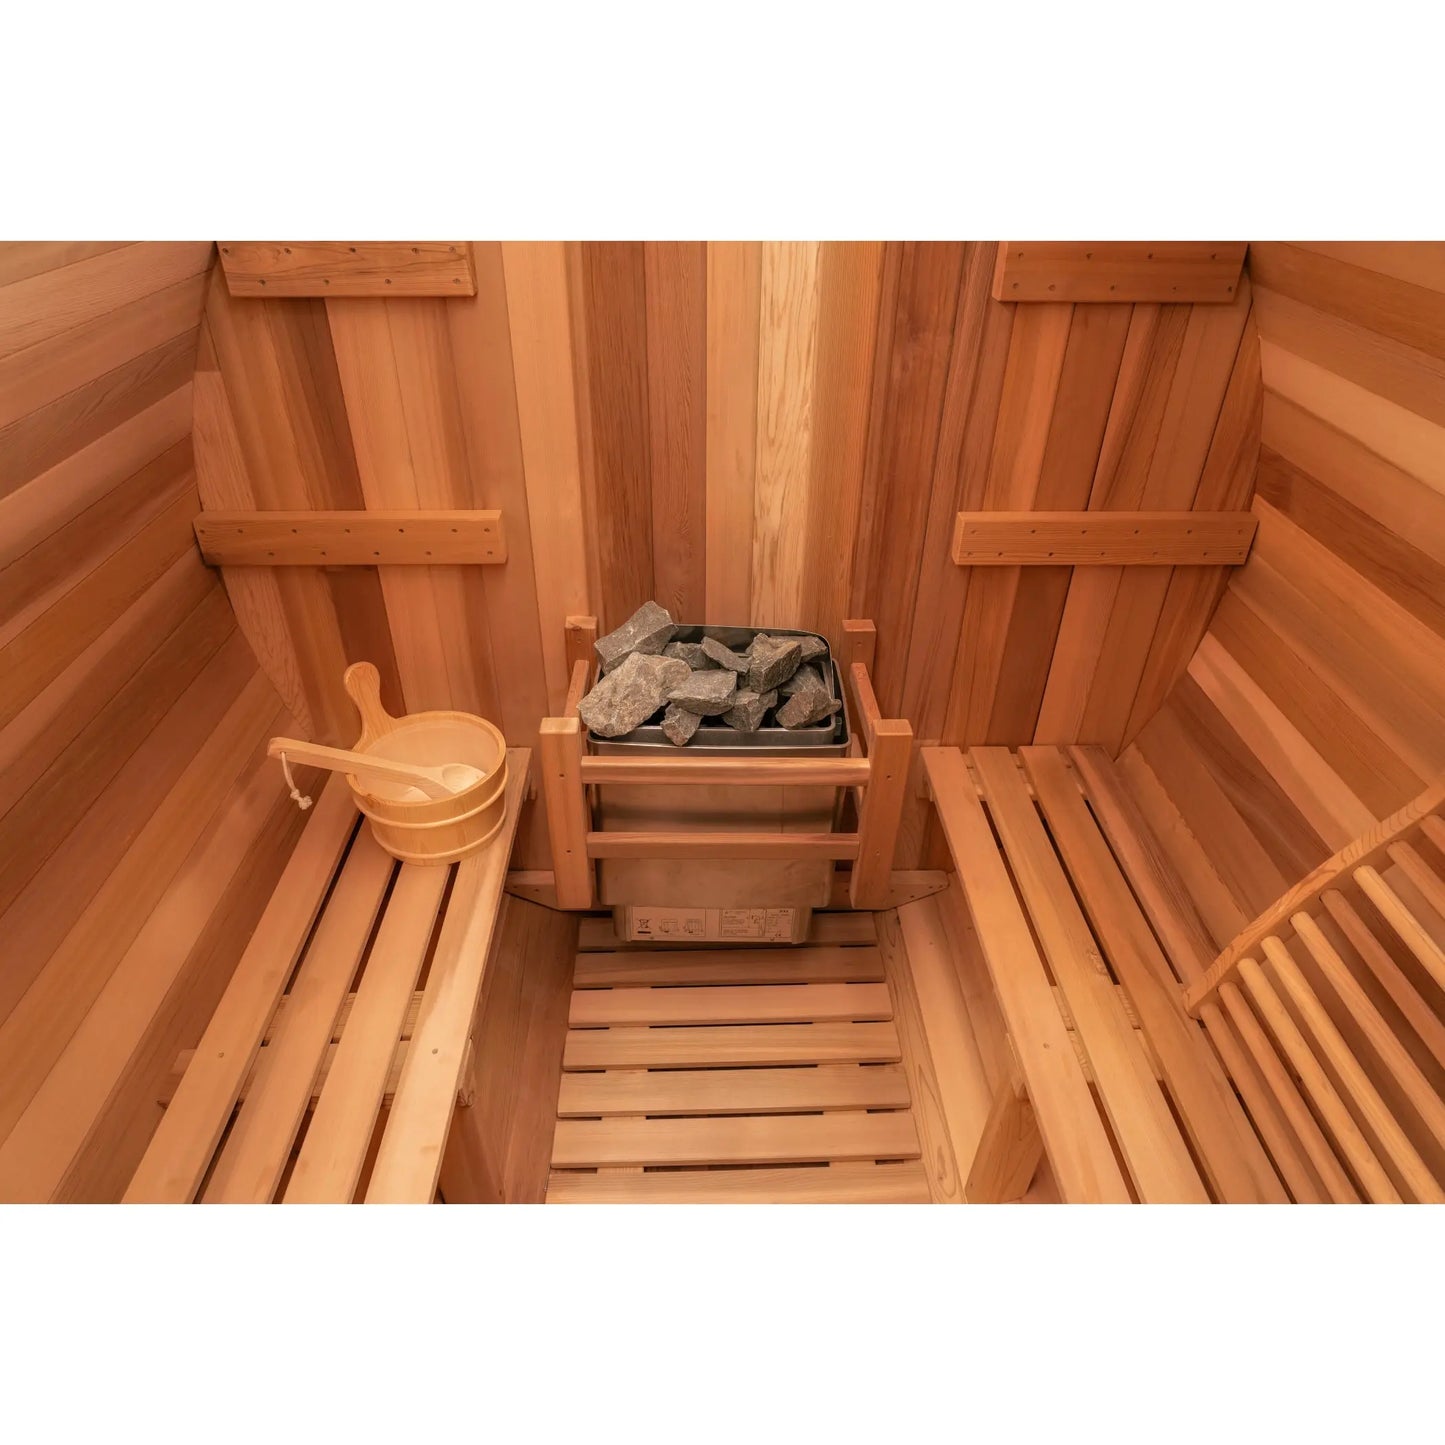 6 FT Classic Red Cedar Barrel Sauna - 4-6 Person Backcountry Recreation